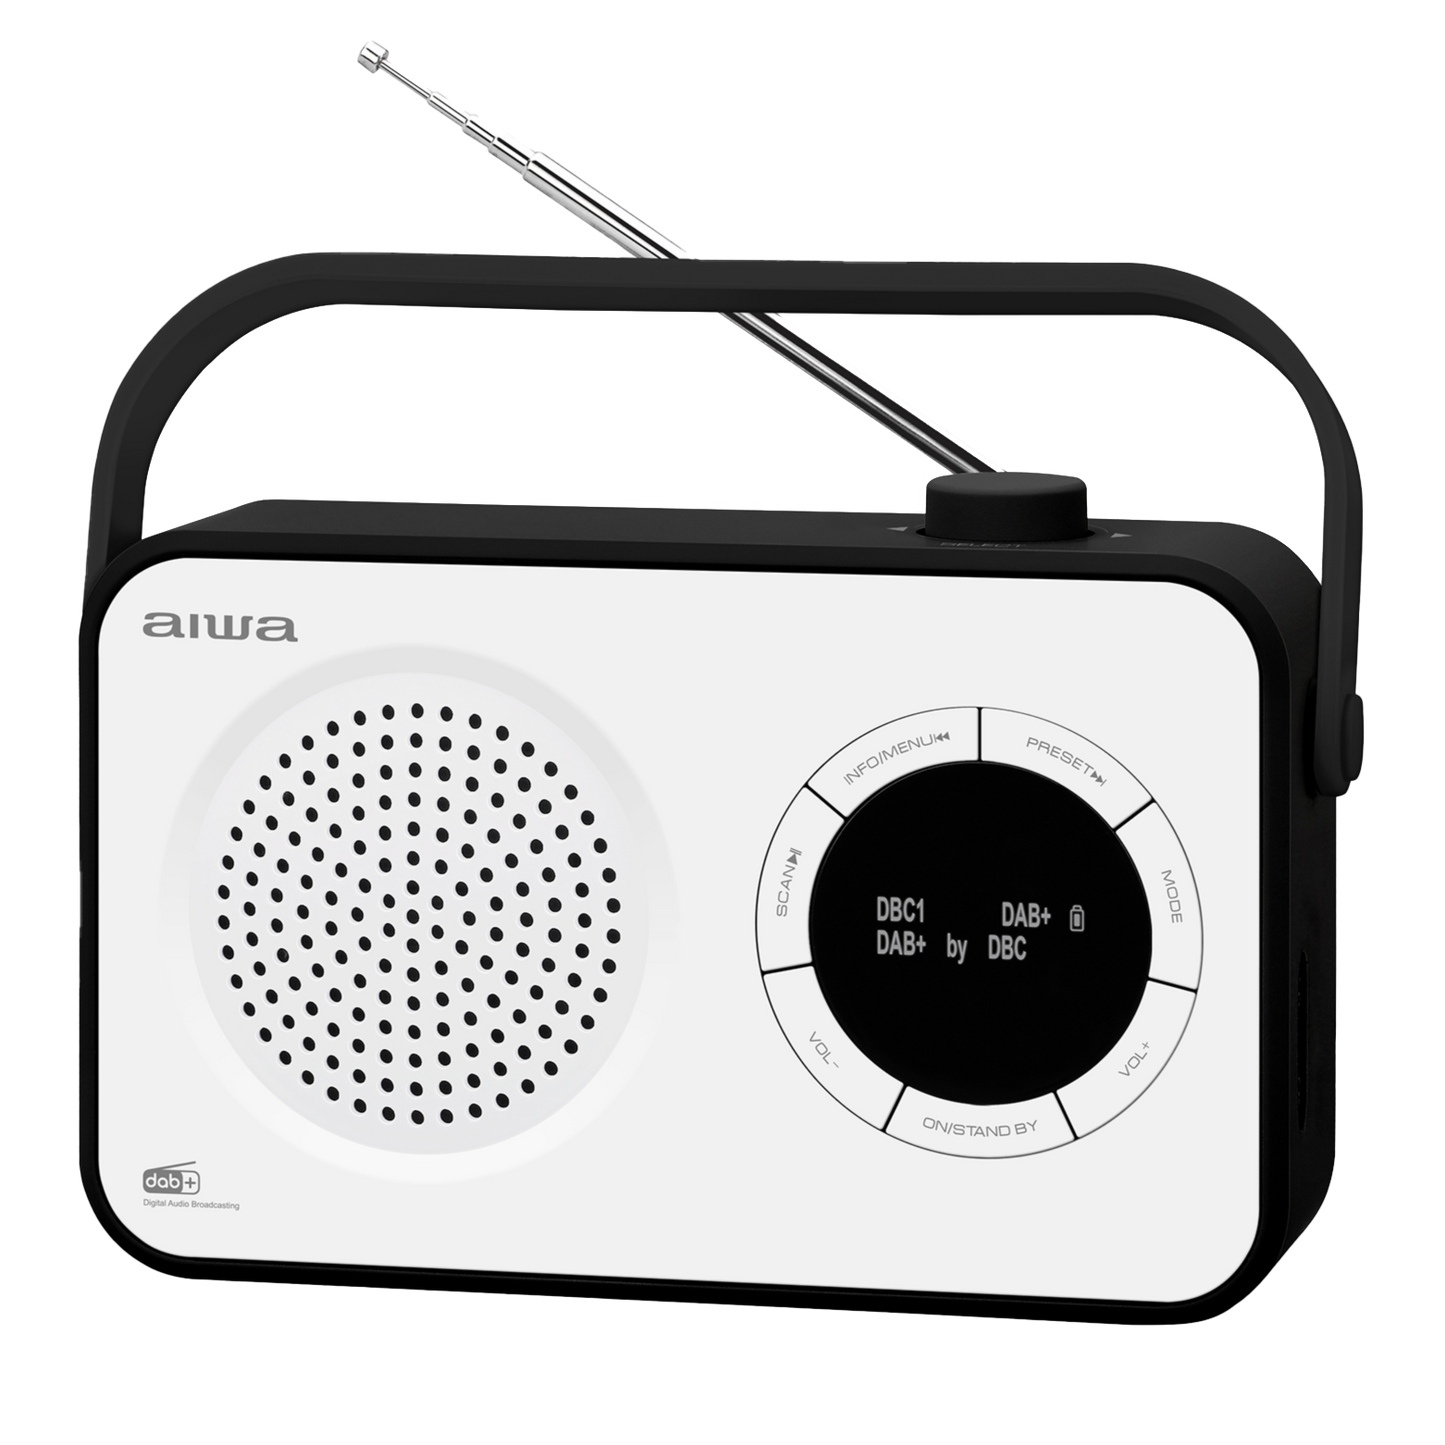 AIWA Portable DAB+ Radio with Bluetooth | AWTR271DAB